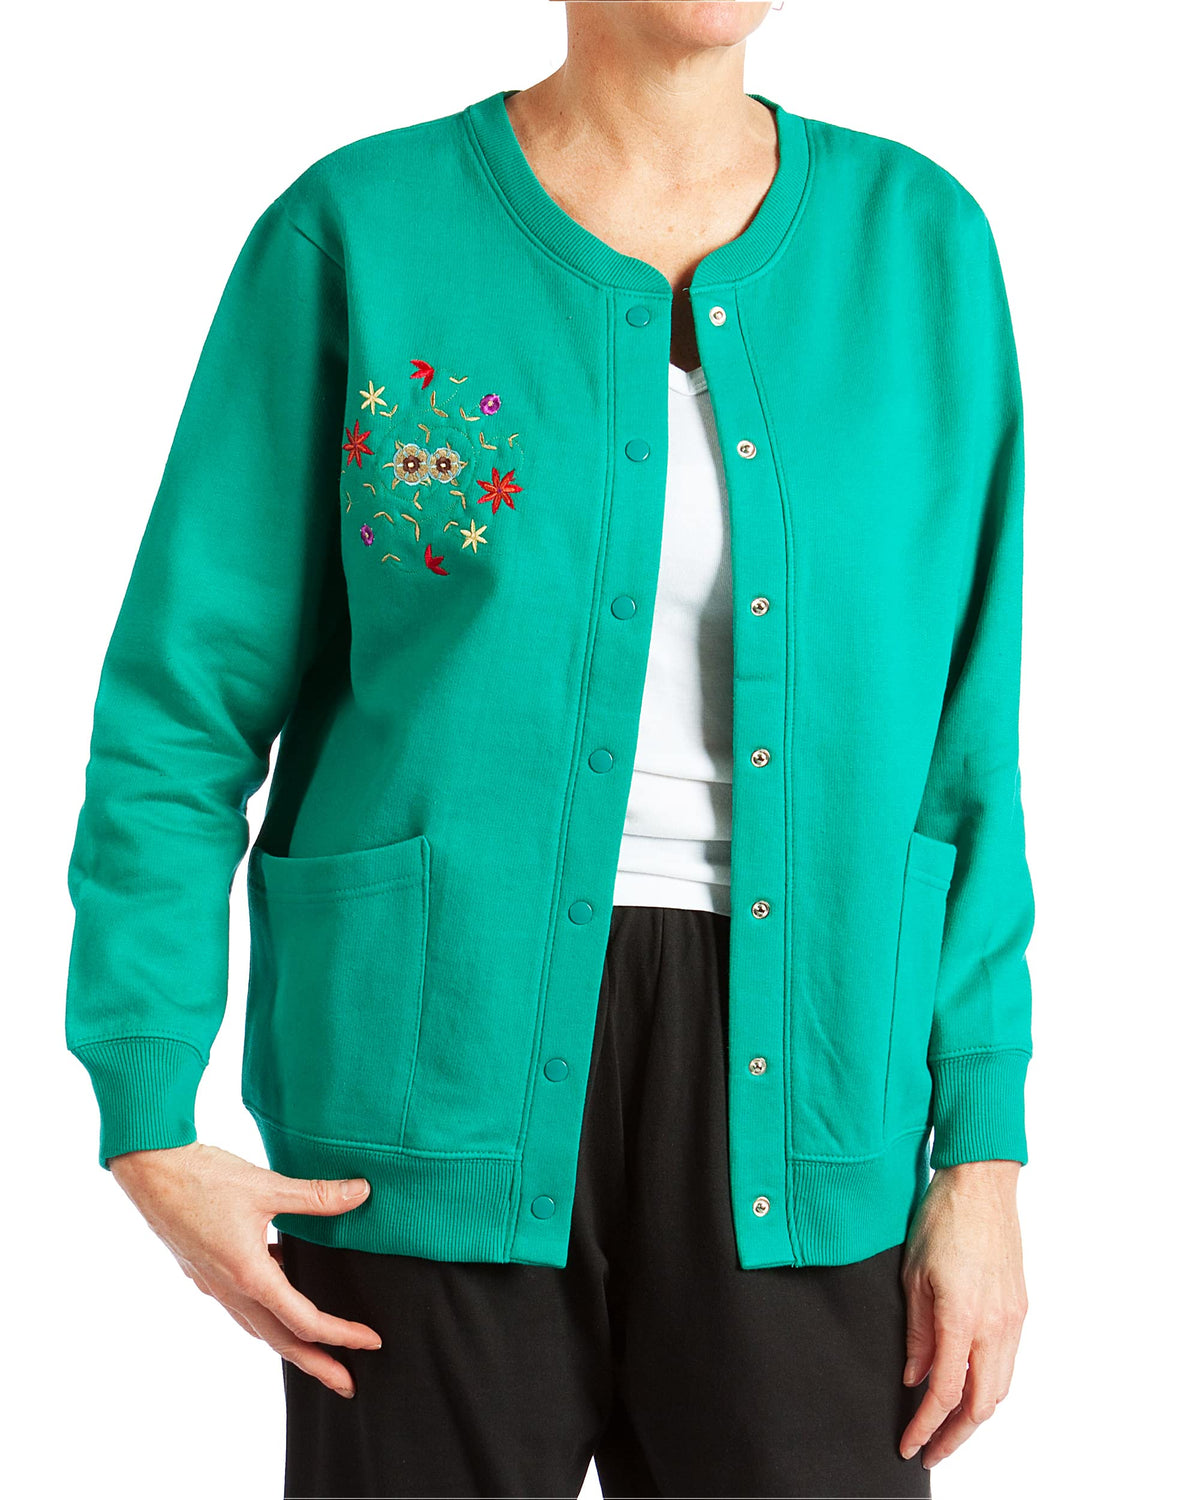 Pembrook Fleece Cardigans for Women with Pockets | Grandma Sweater wit